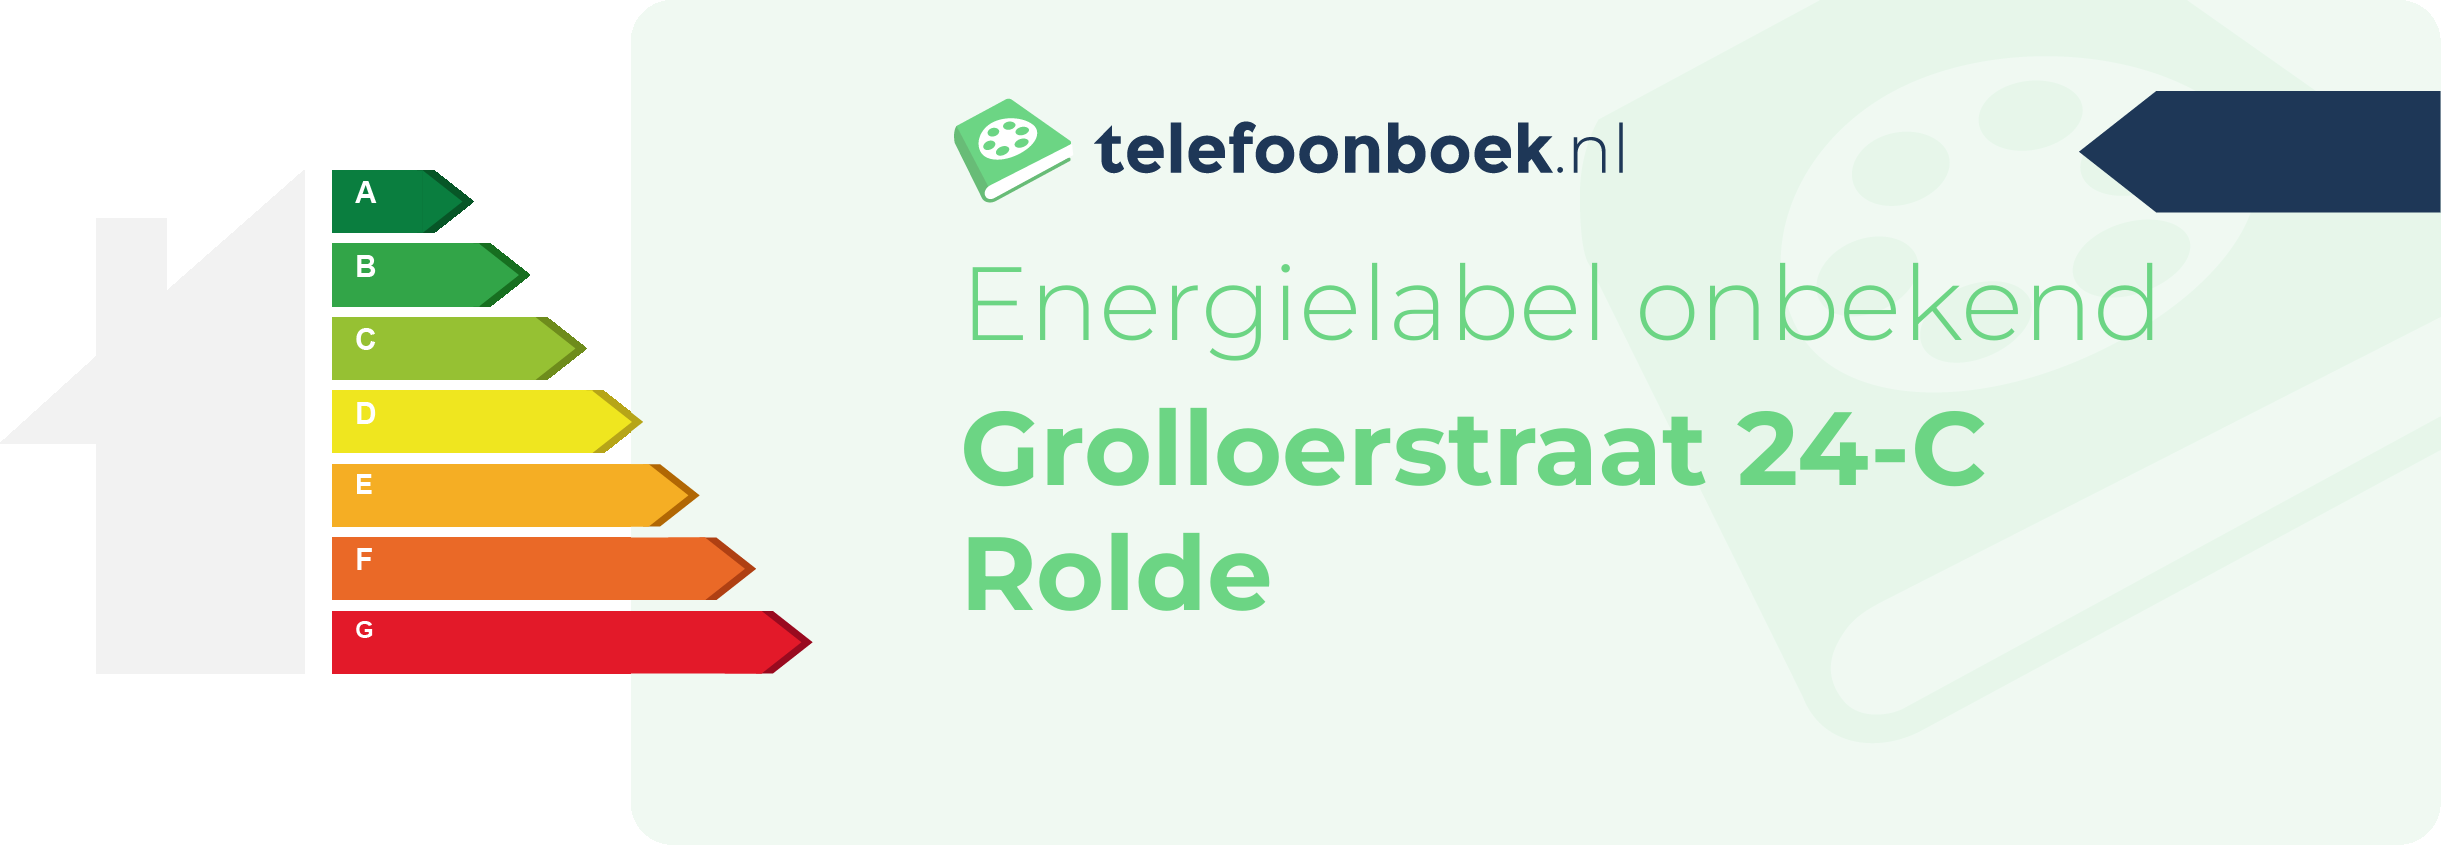 Energielabel Grolloerstraat 24-C Rolde